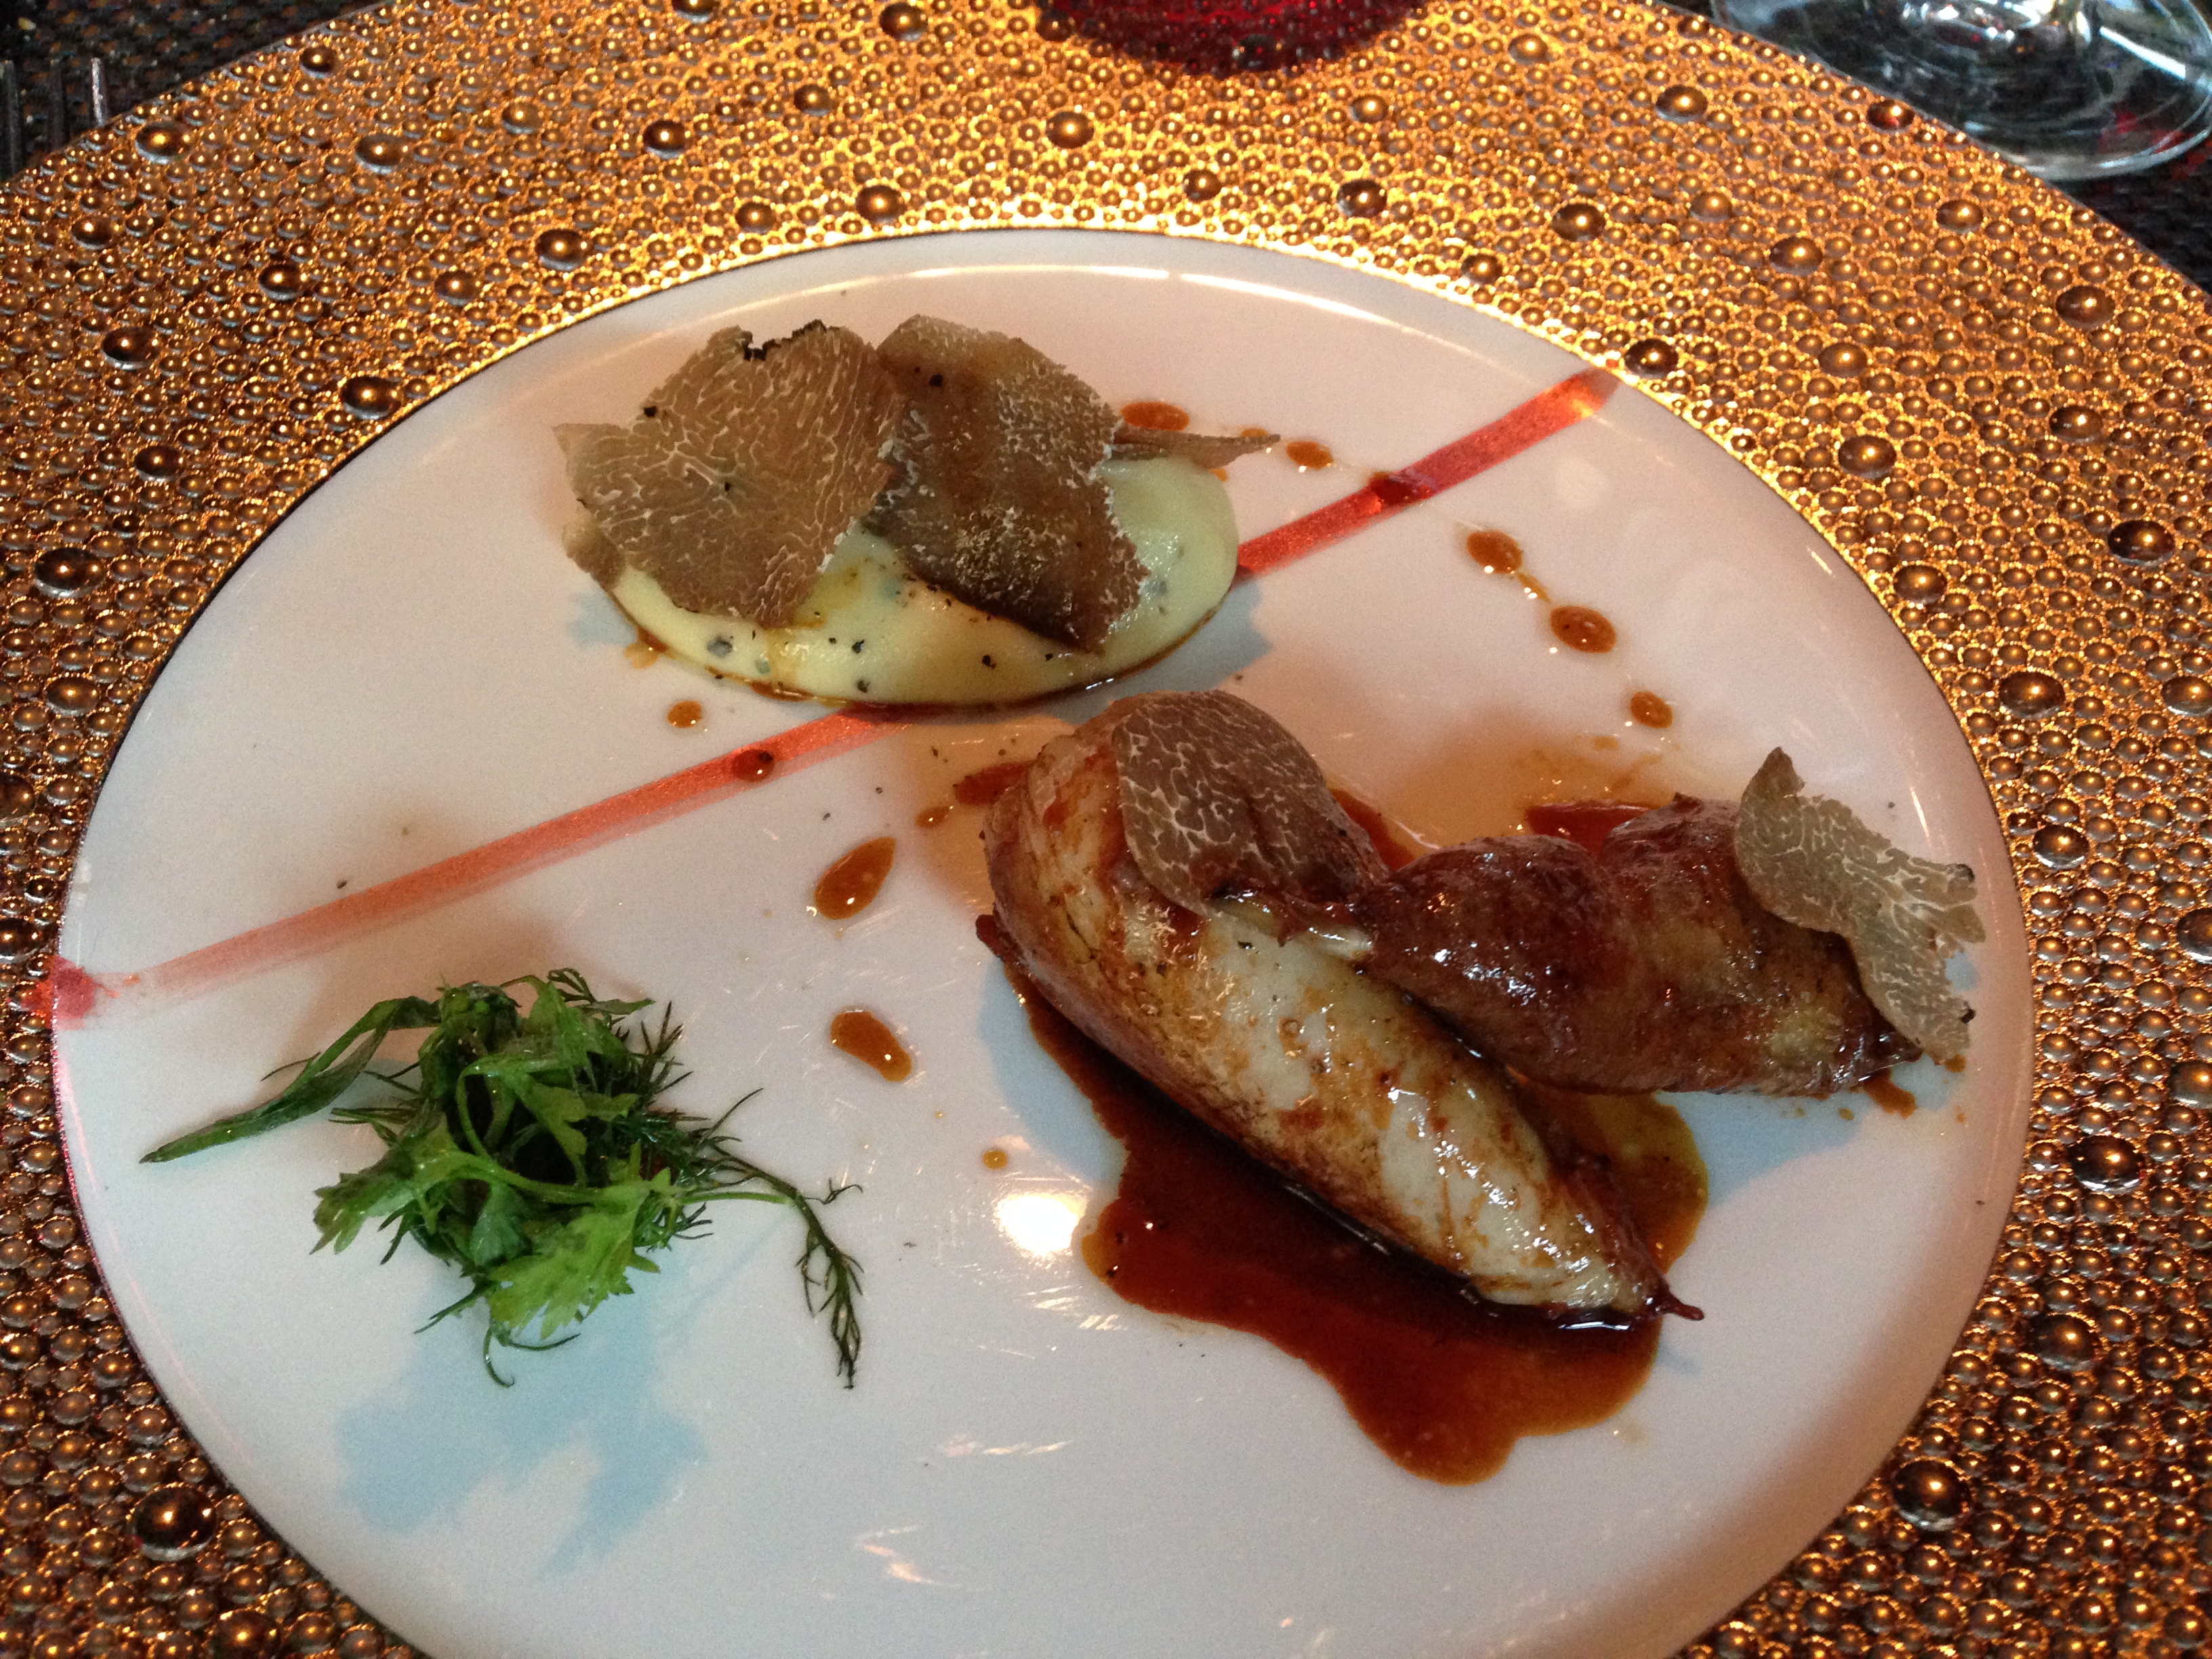 Deliciosos Destinos Las Vegas - Peito de codorniz frita com Foie gras 